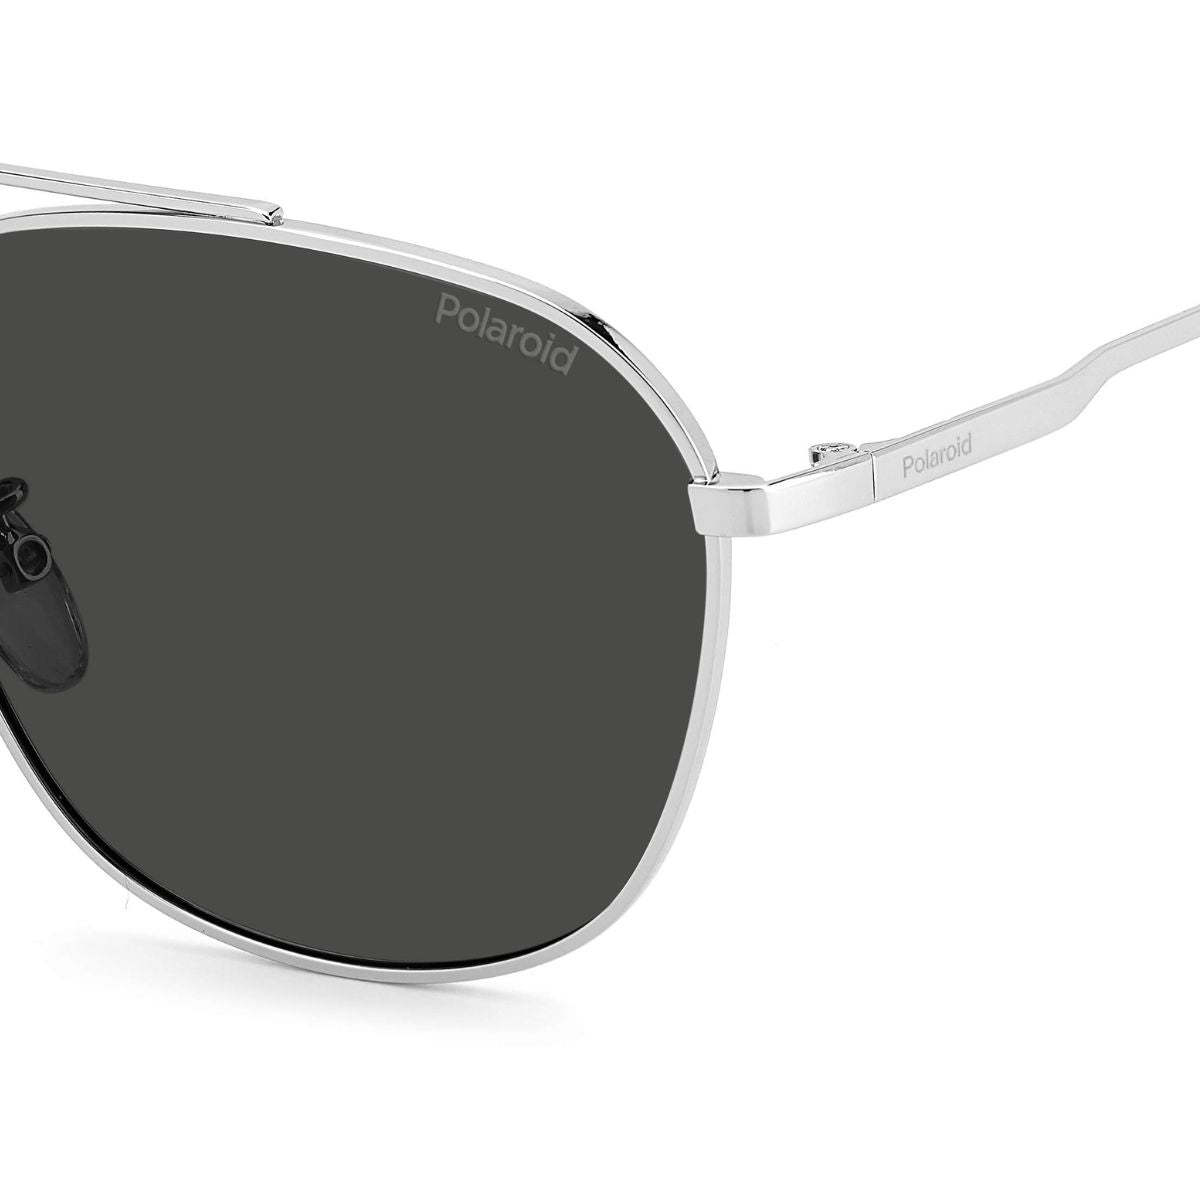 "Buy Stylish Polaroid 4127 Silver Polarized Sunglasses For Mens At Optorium"